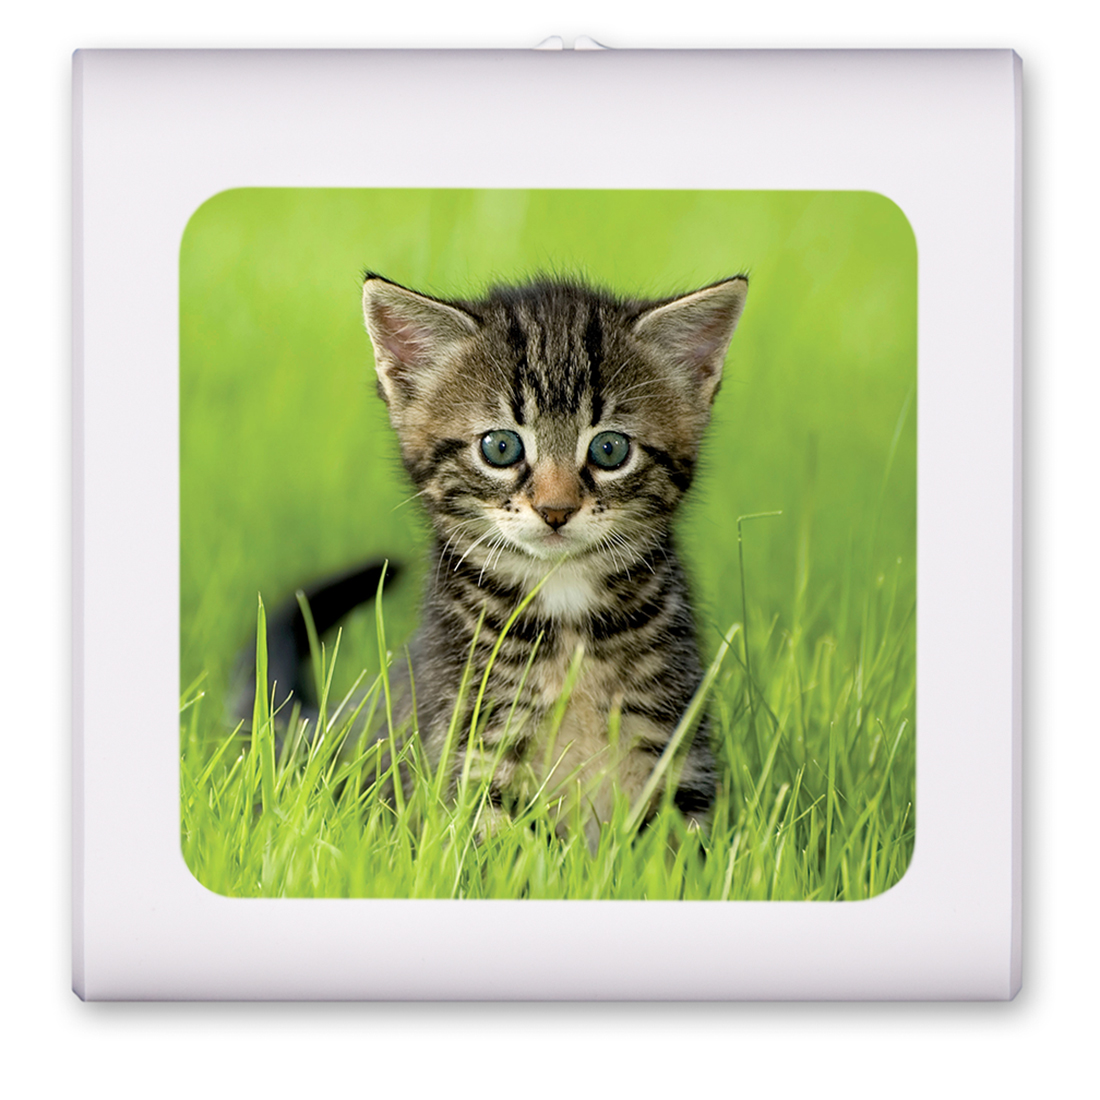 Kitten in the Grass - #7616